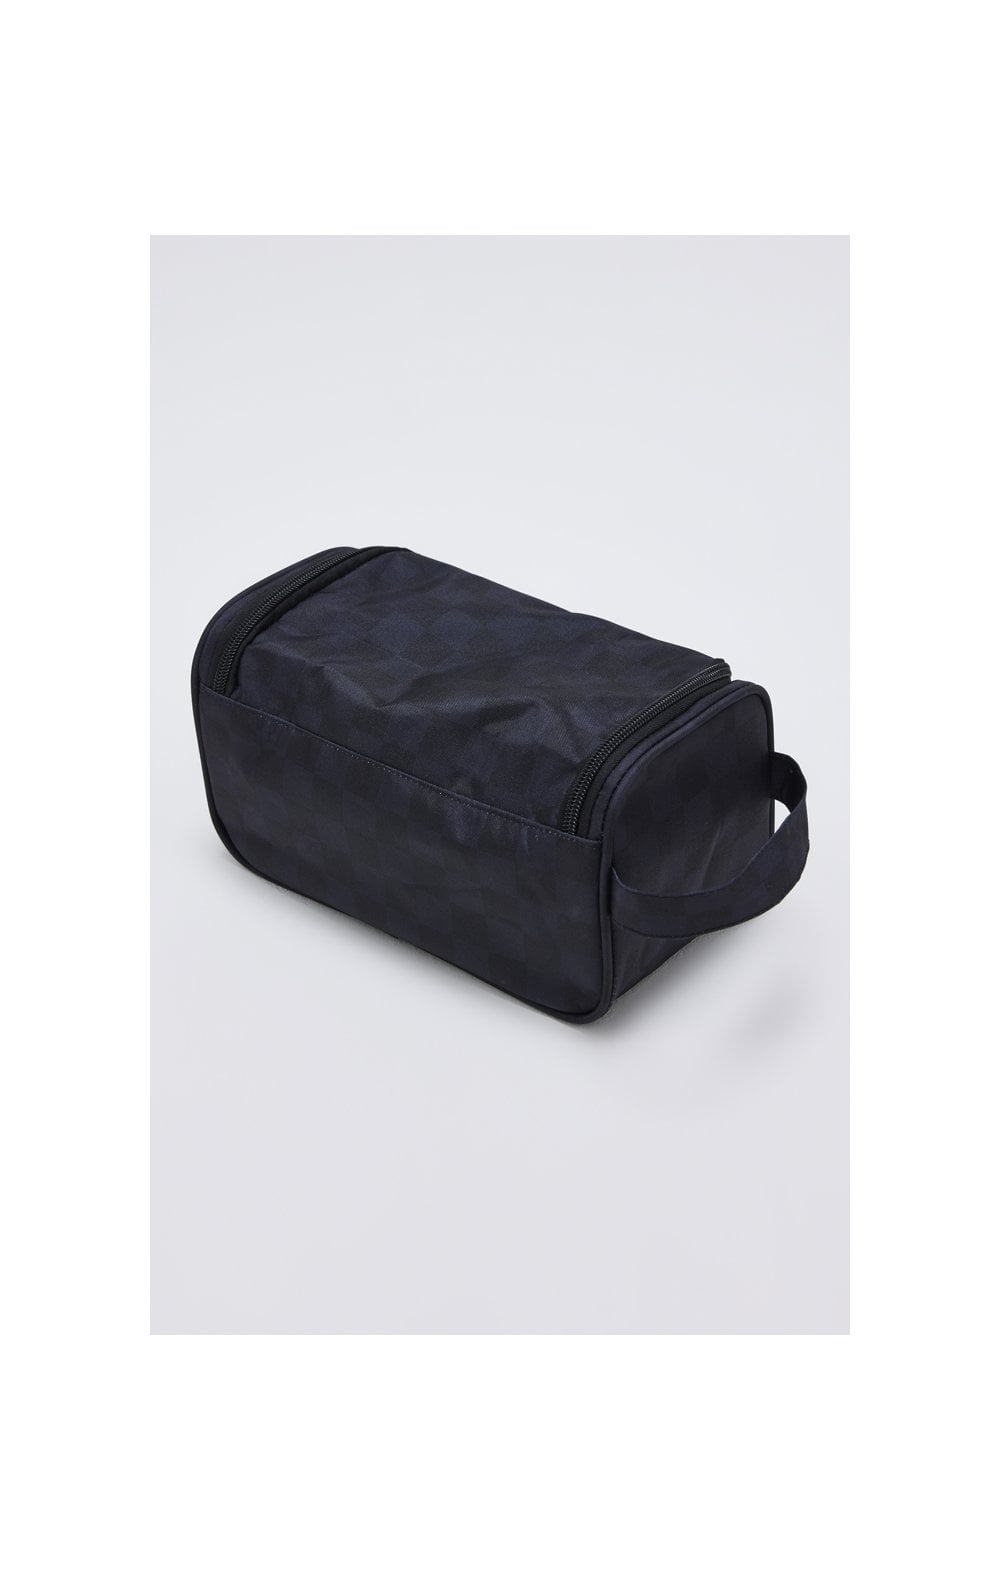 SikSilk Elite Checkered Wash Bag - Black (2)